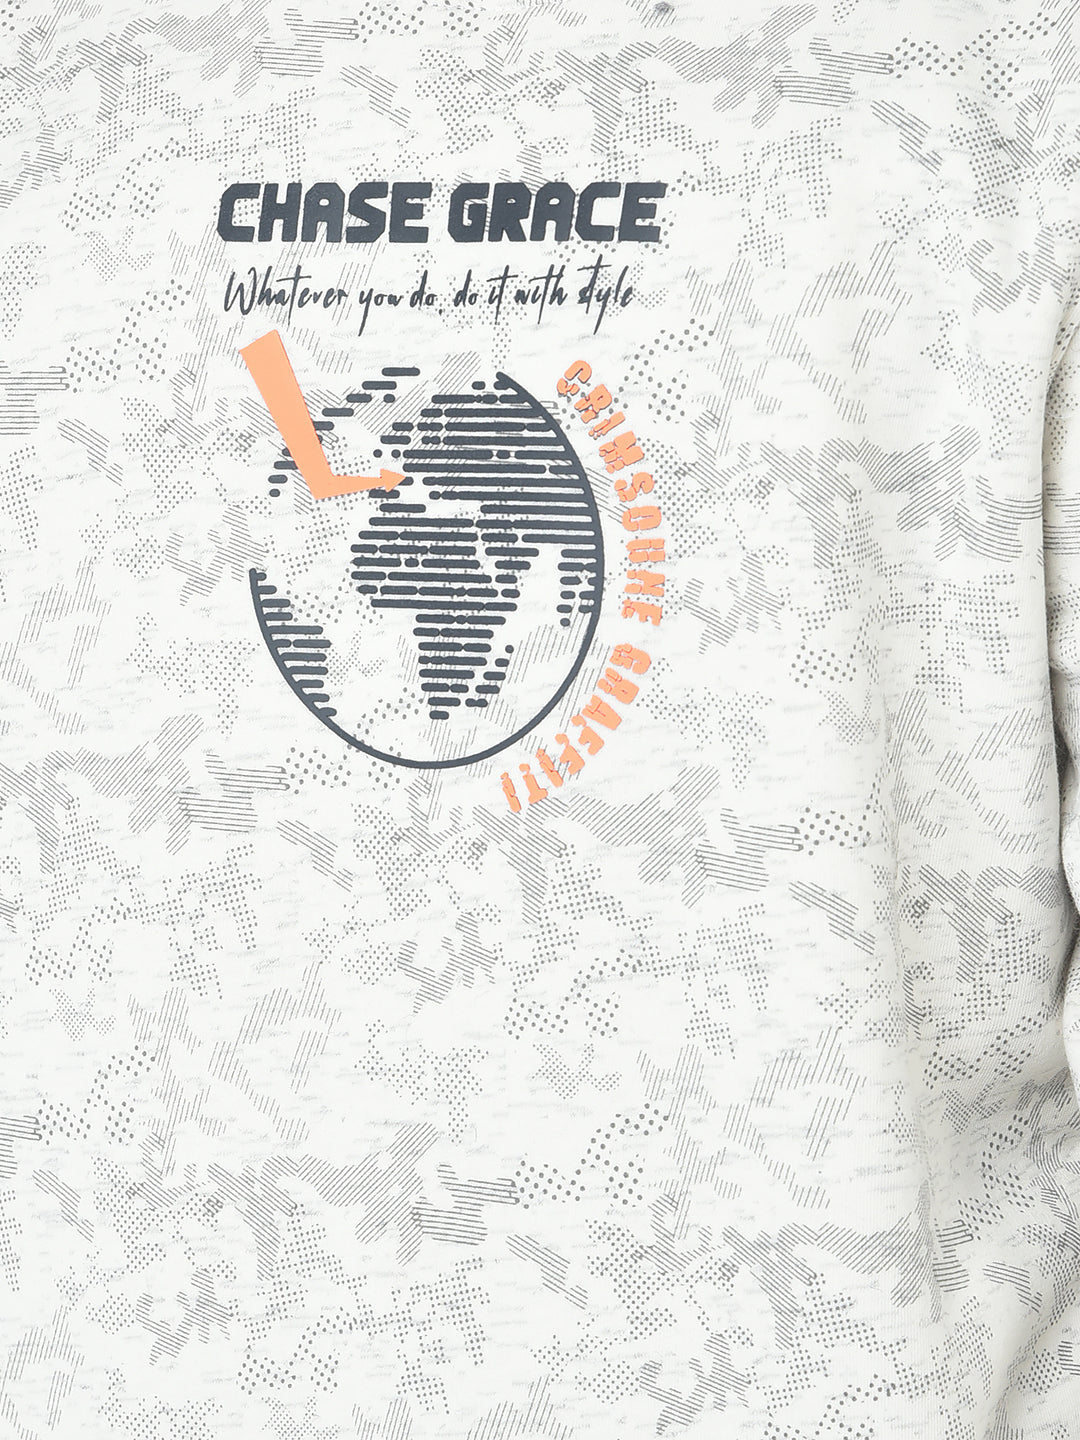  Grey Melange Globe Sweatshirt